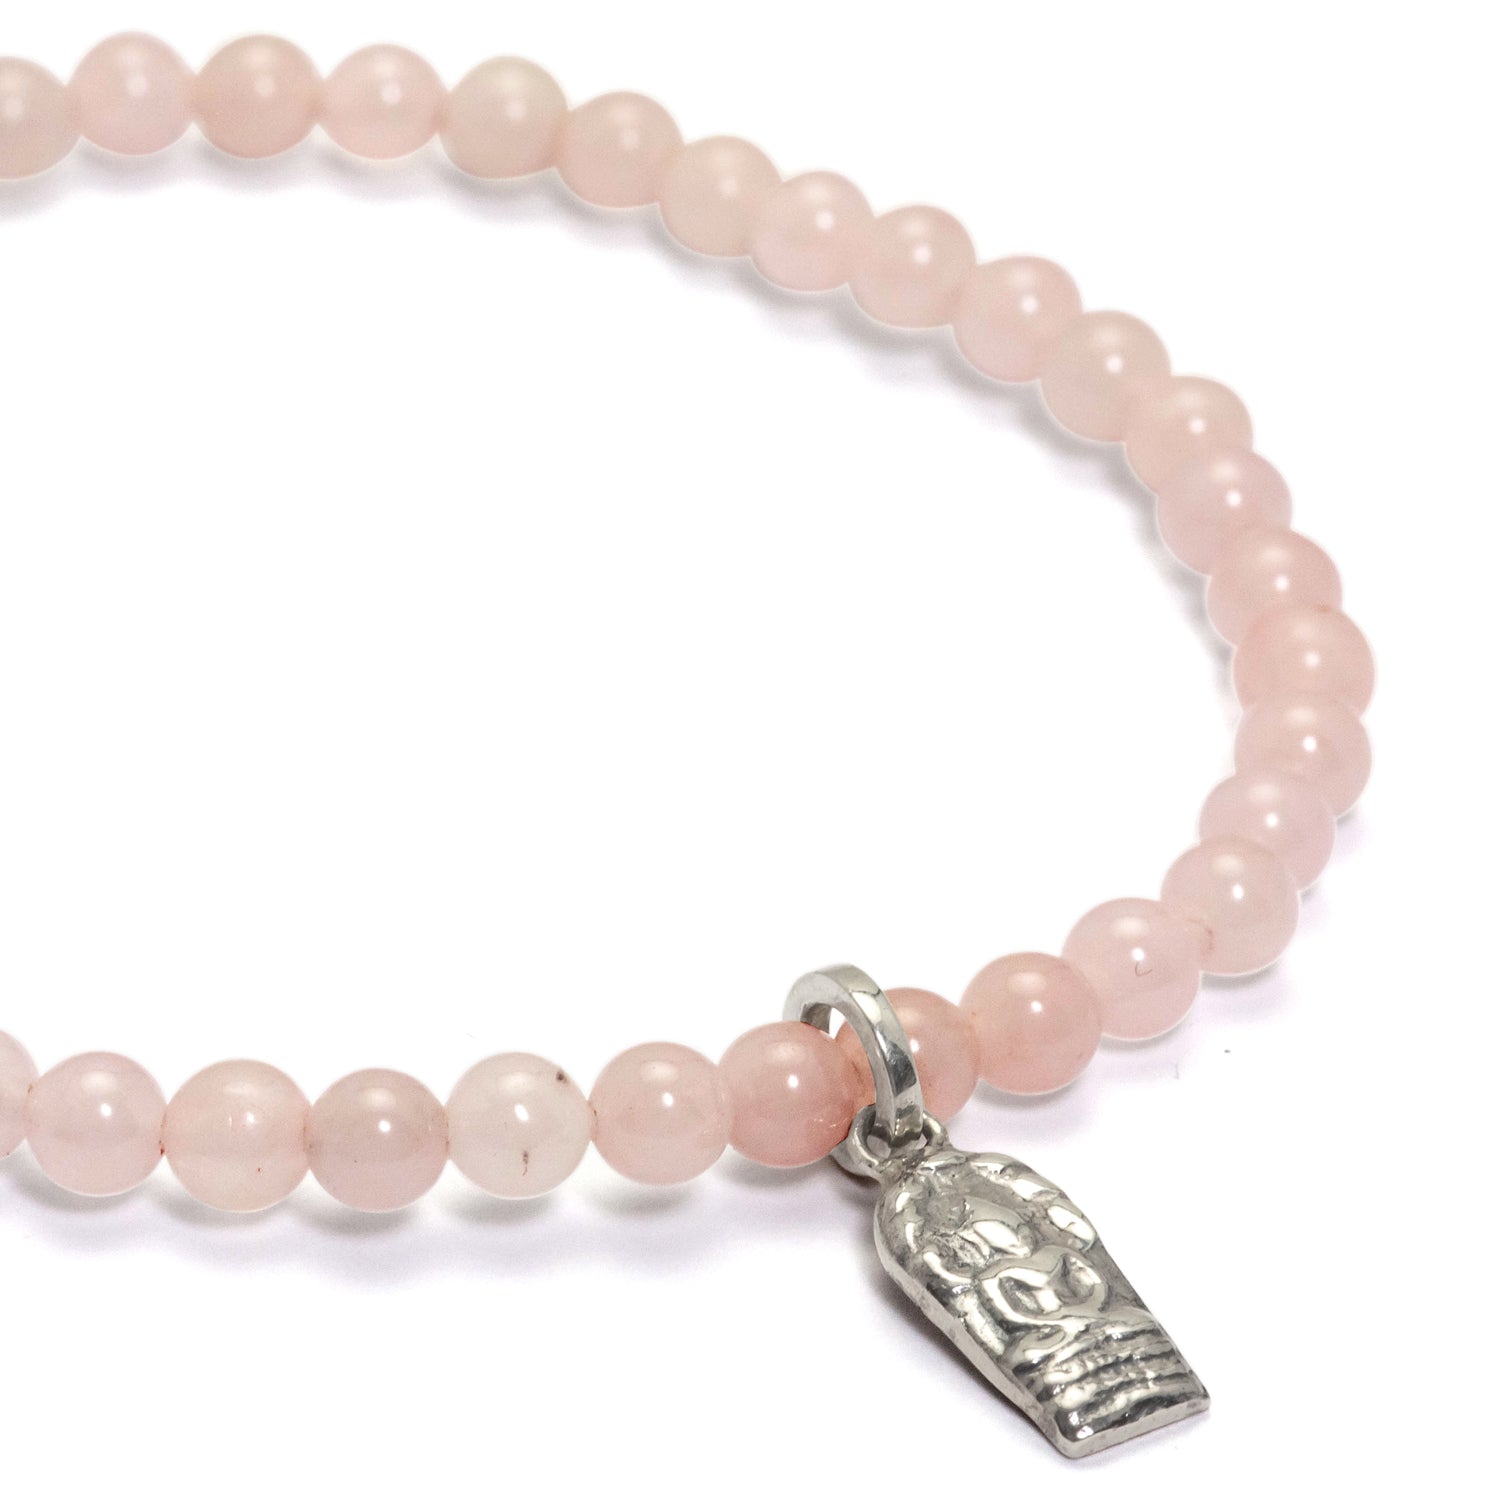 Buddha bracelet mini with rose quartz and silver pendant from ETERNAL BLISS - Spiritual jewelry